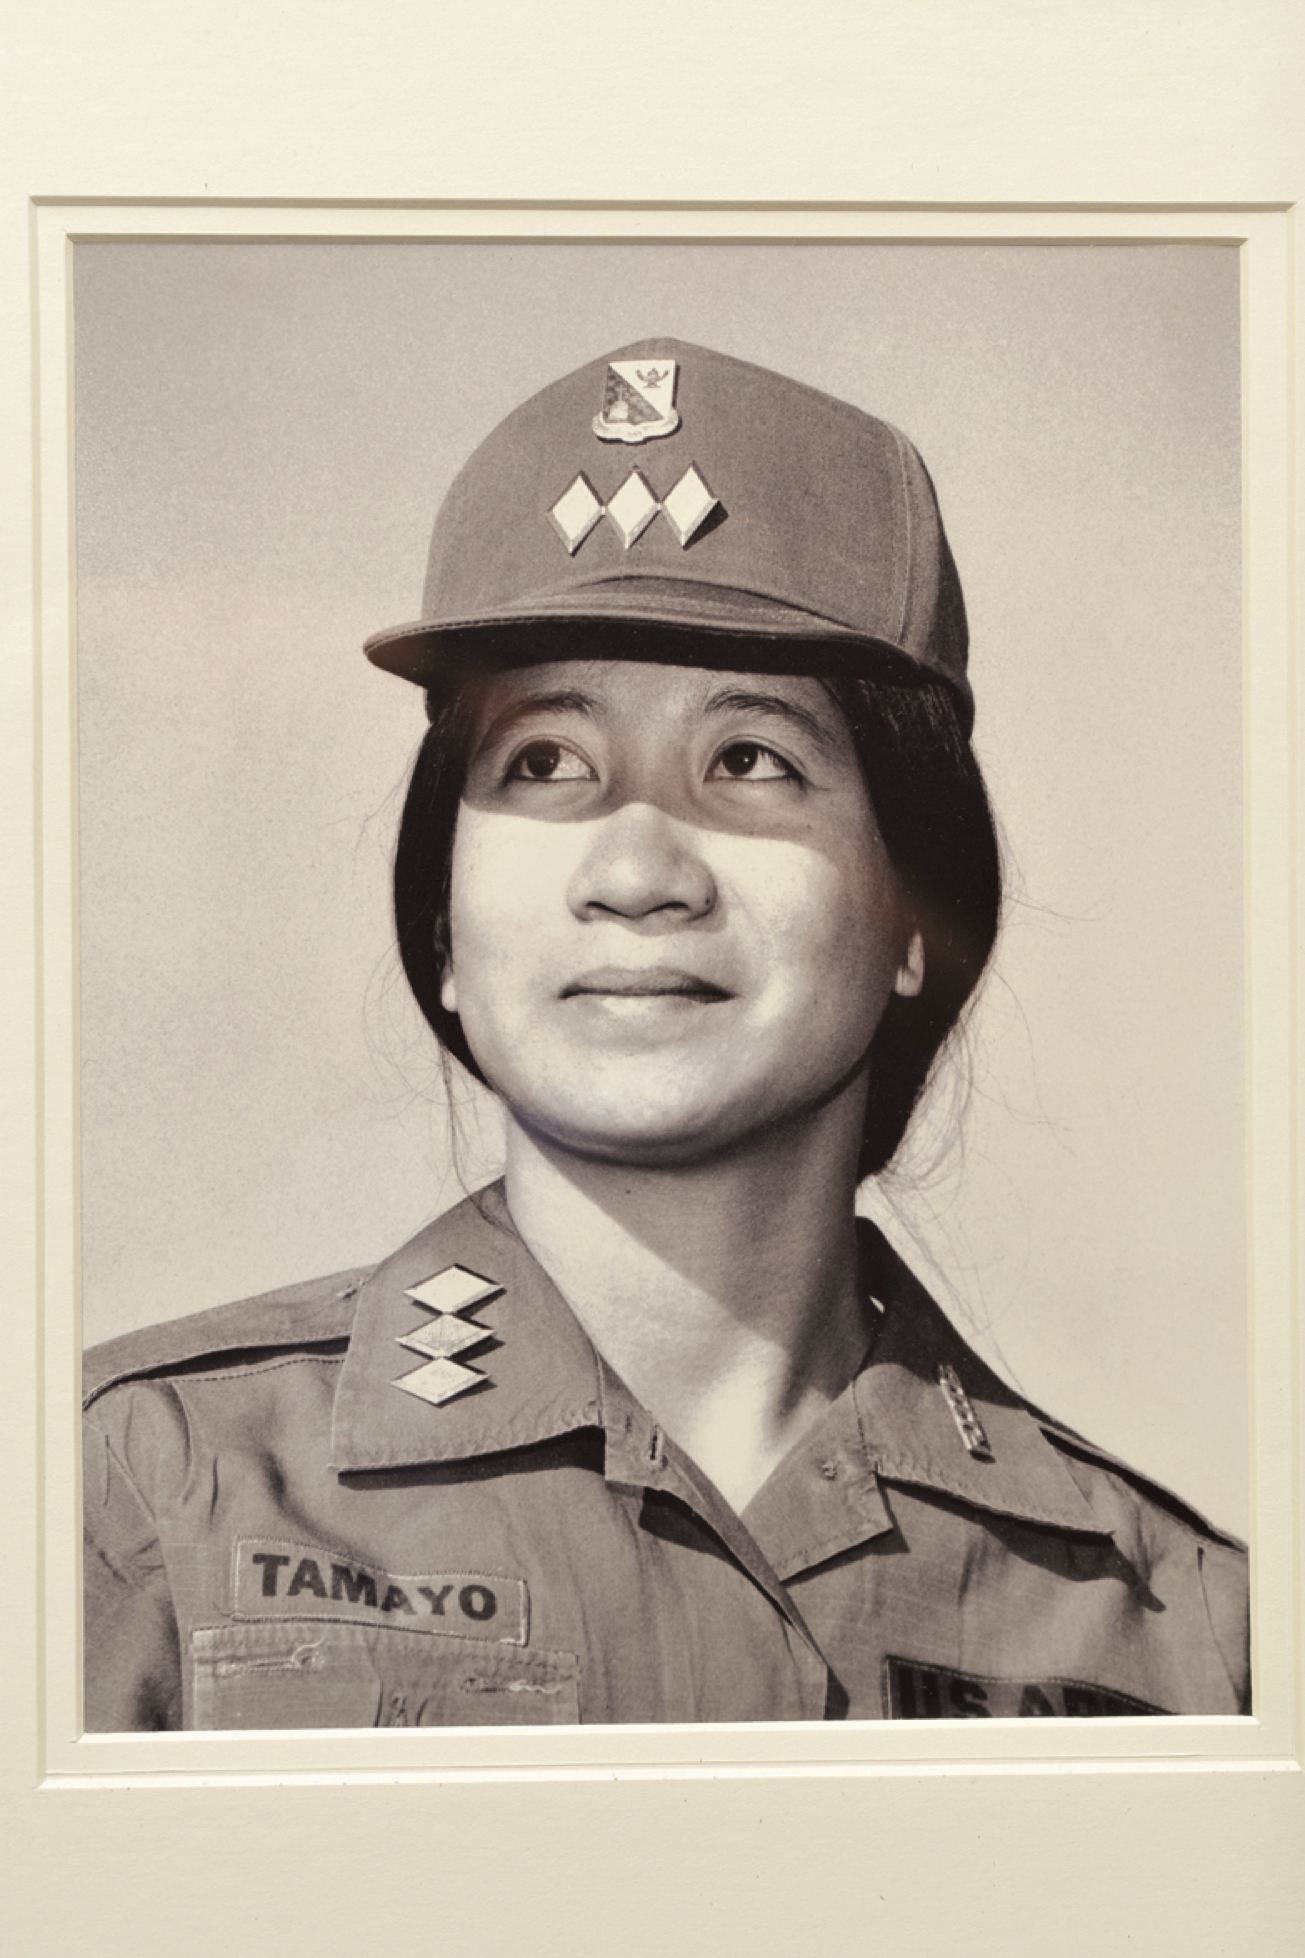 Rita Tamayo, the first female cadet battalion commander at SCU